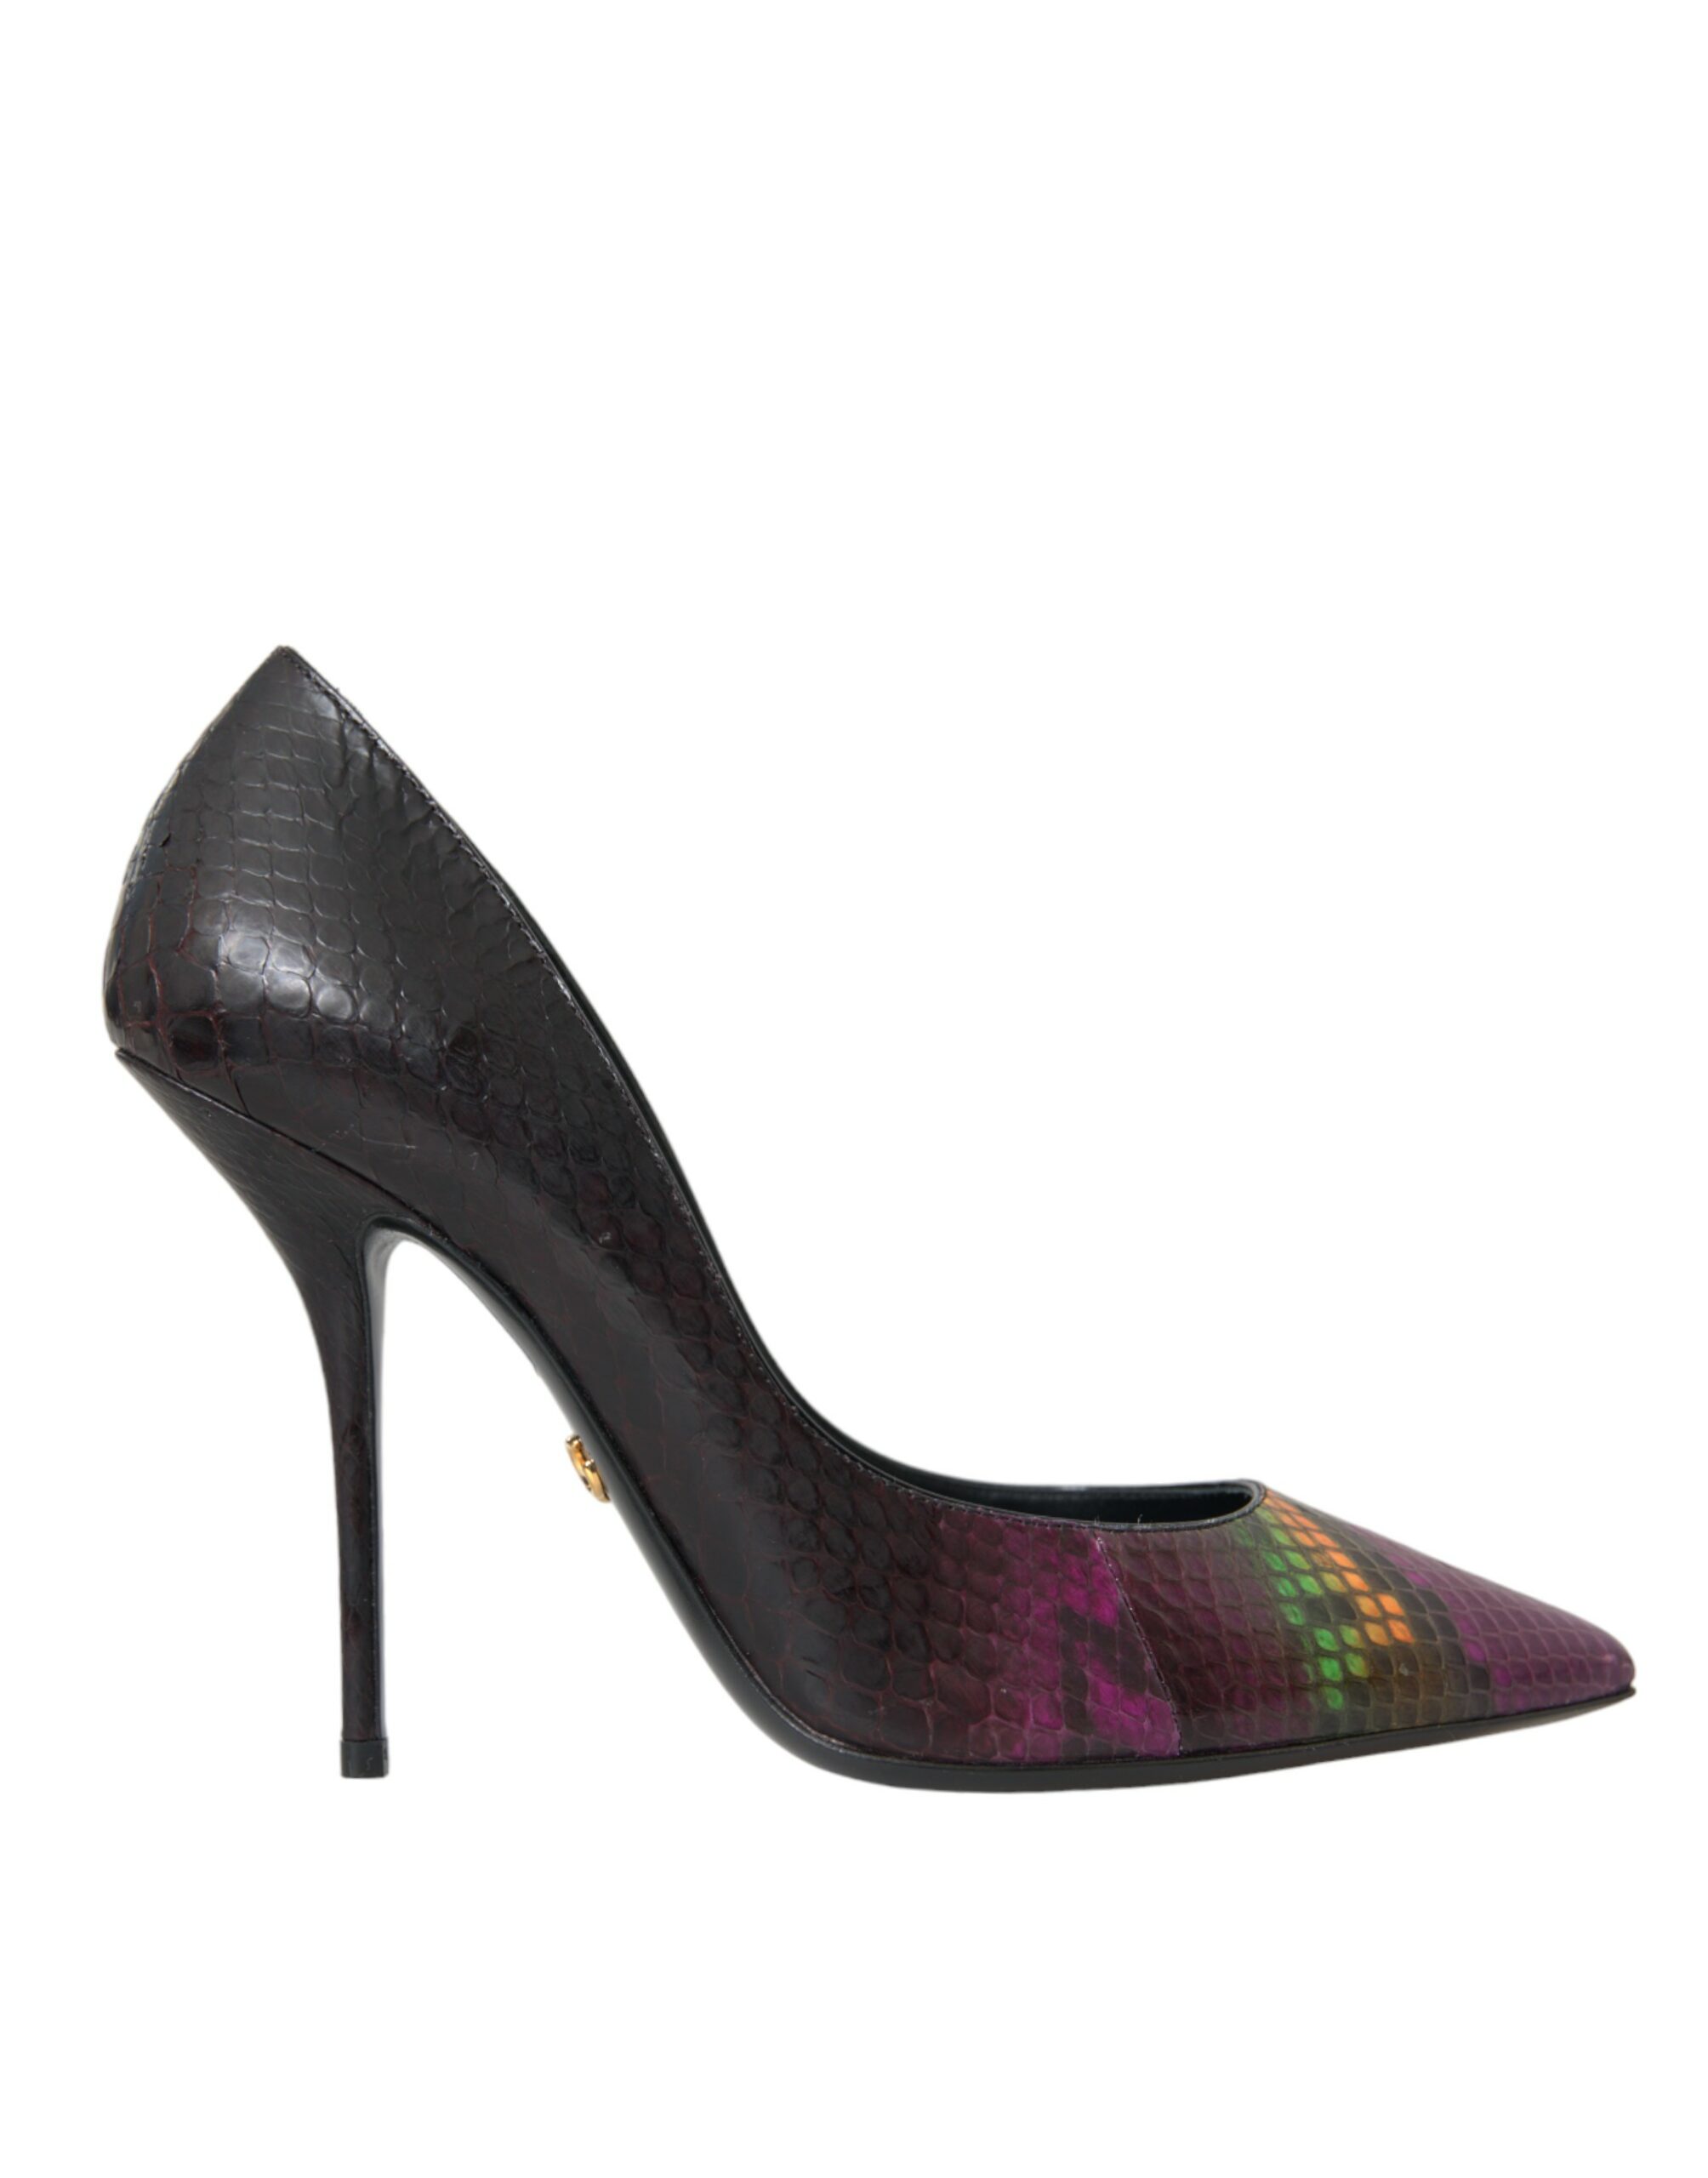 Dolce & Gabbana Multicolor Exotic Leather Heels Pumps Shoes EU39/US8.5 multicolor